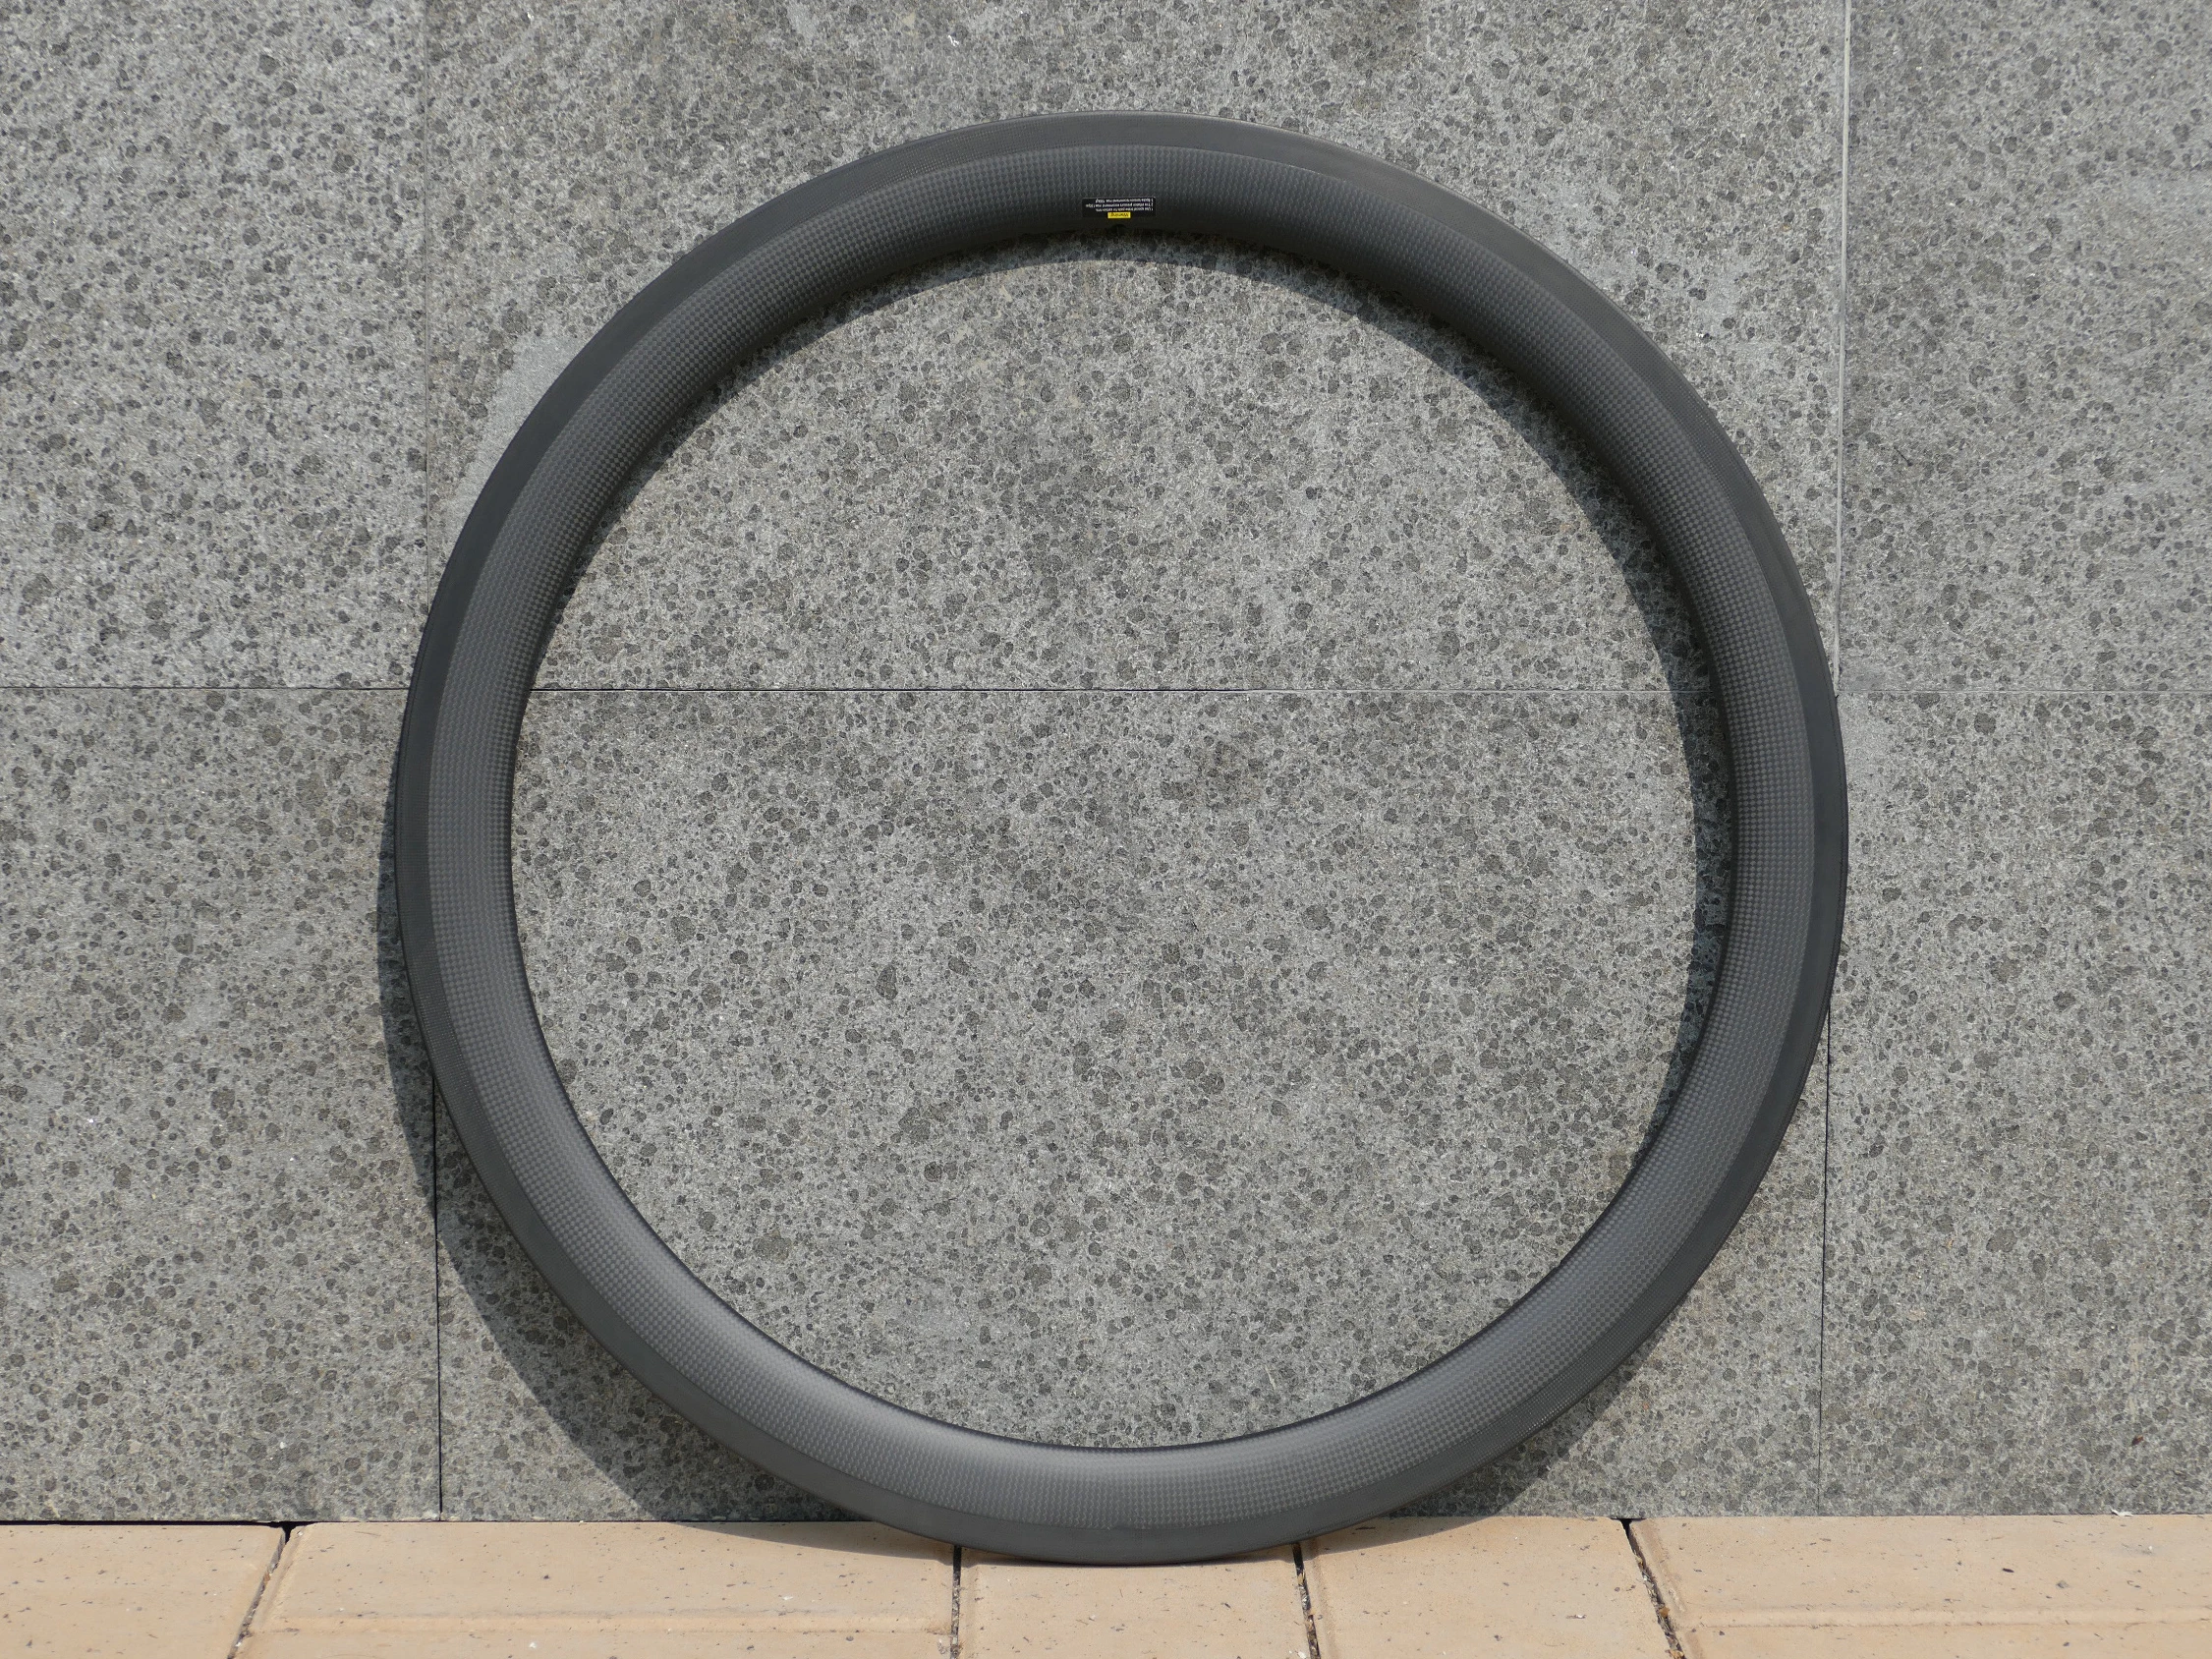 

CT5 High Quality Full Carbon Road Bike Tubeless Wheel Rim Basalt Brake Surface Rim Depth 50mm Width 23mm Including 1 Pair